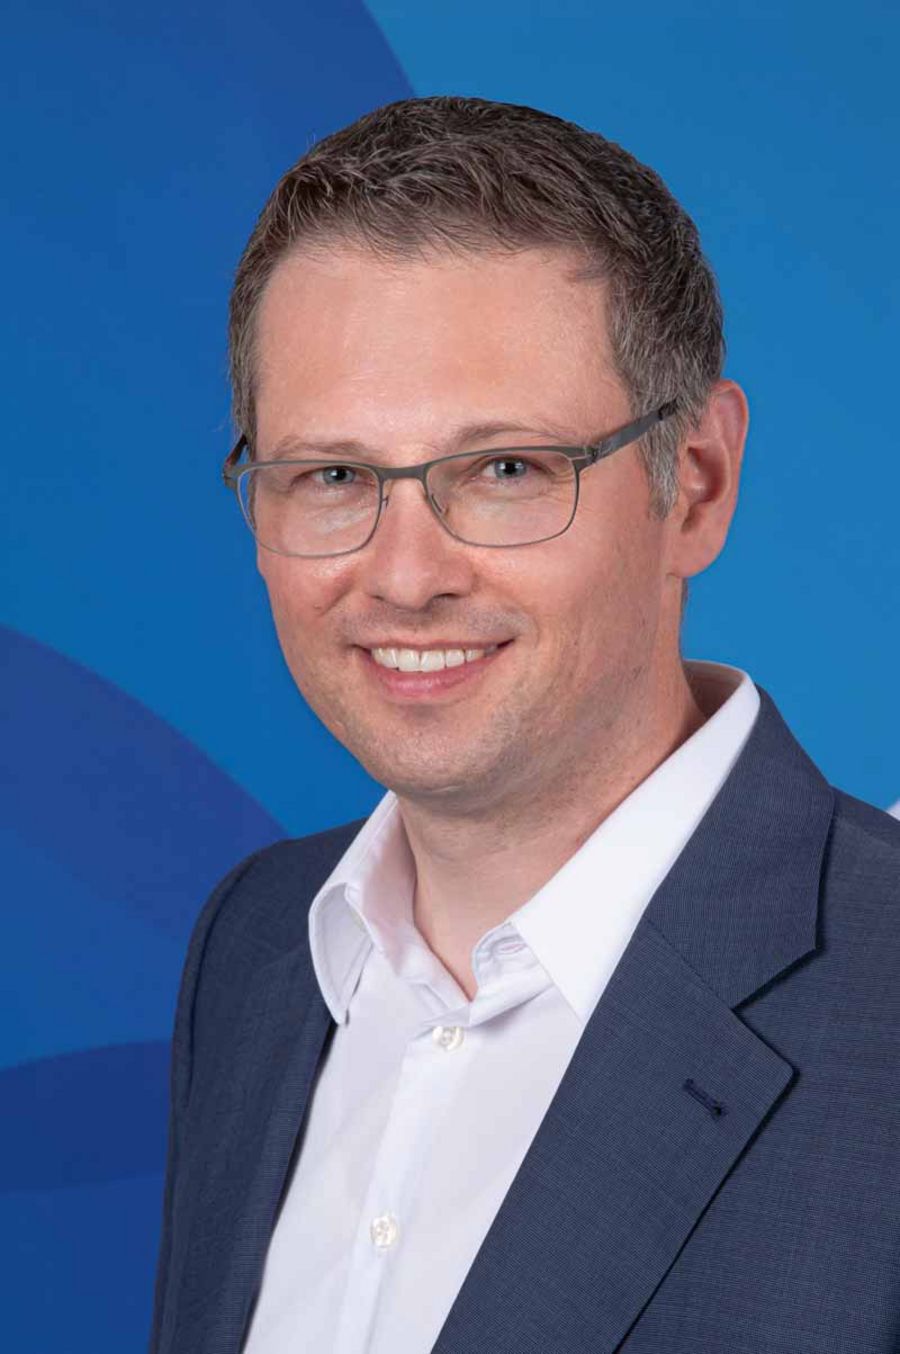 Ralf Dommermuth, CFO Germany, Austria, Belgium